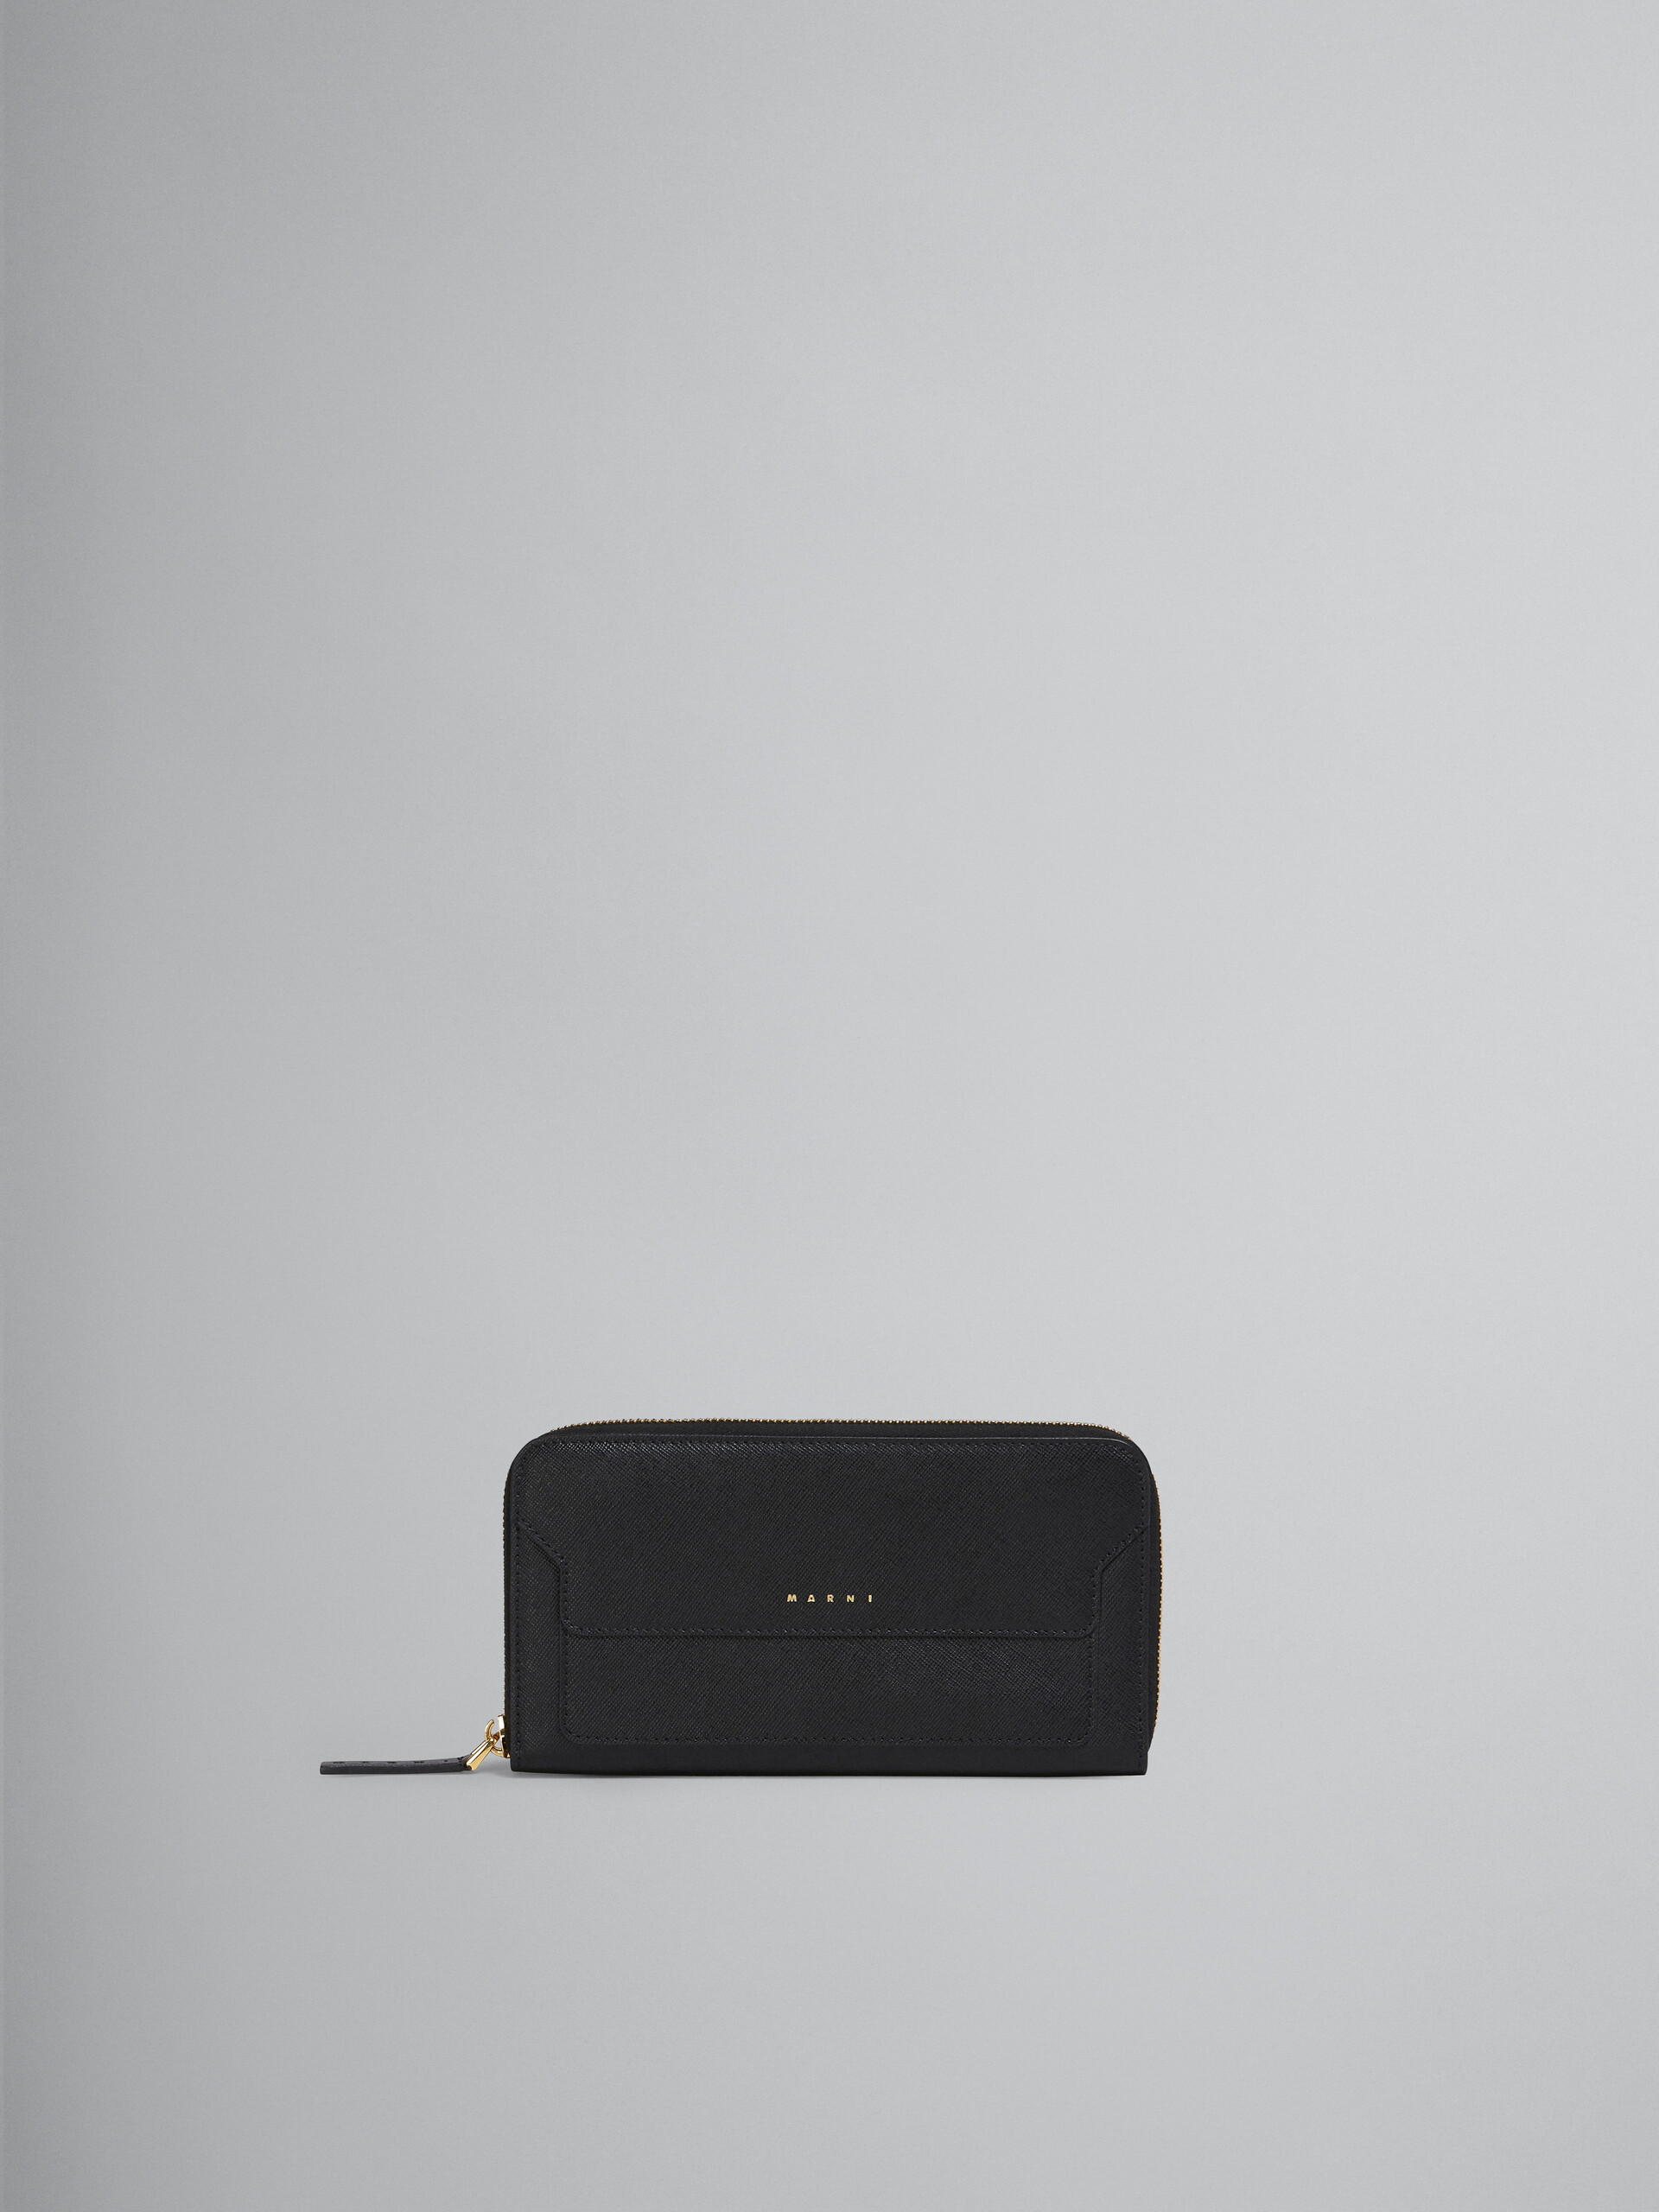 Black saffiano leather zip-around wallet - Wallets - Image 1